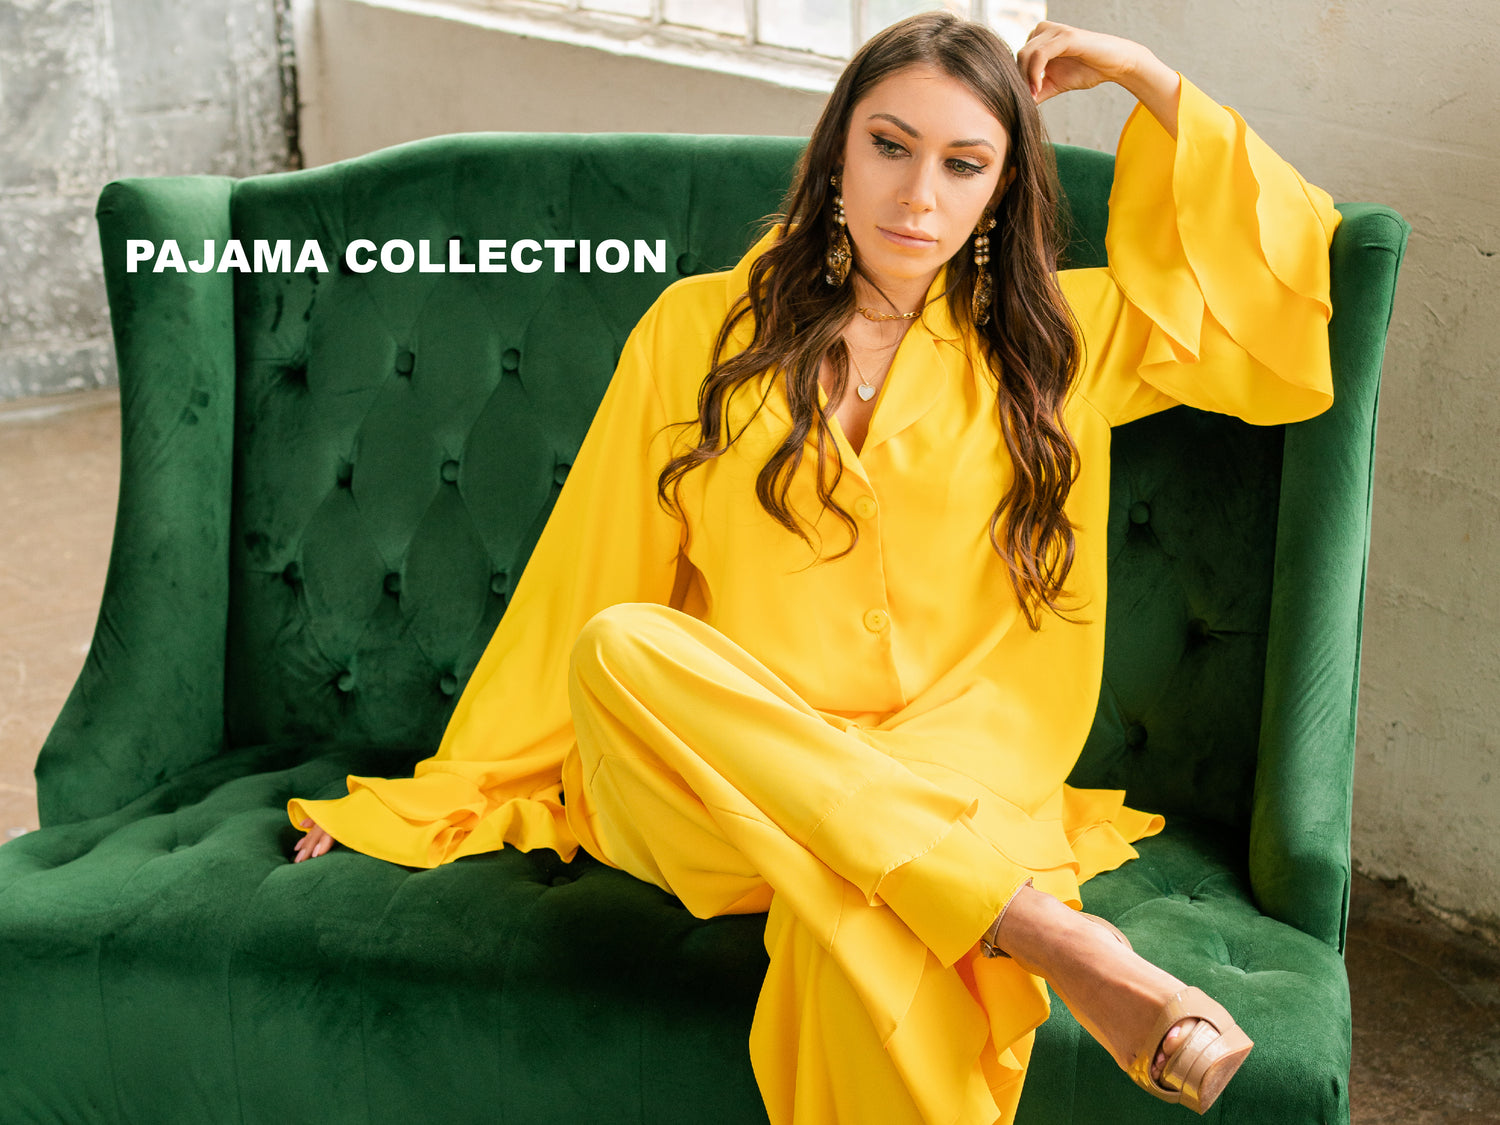 Pajama Collection